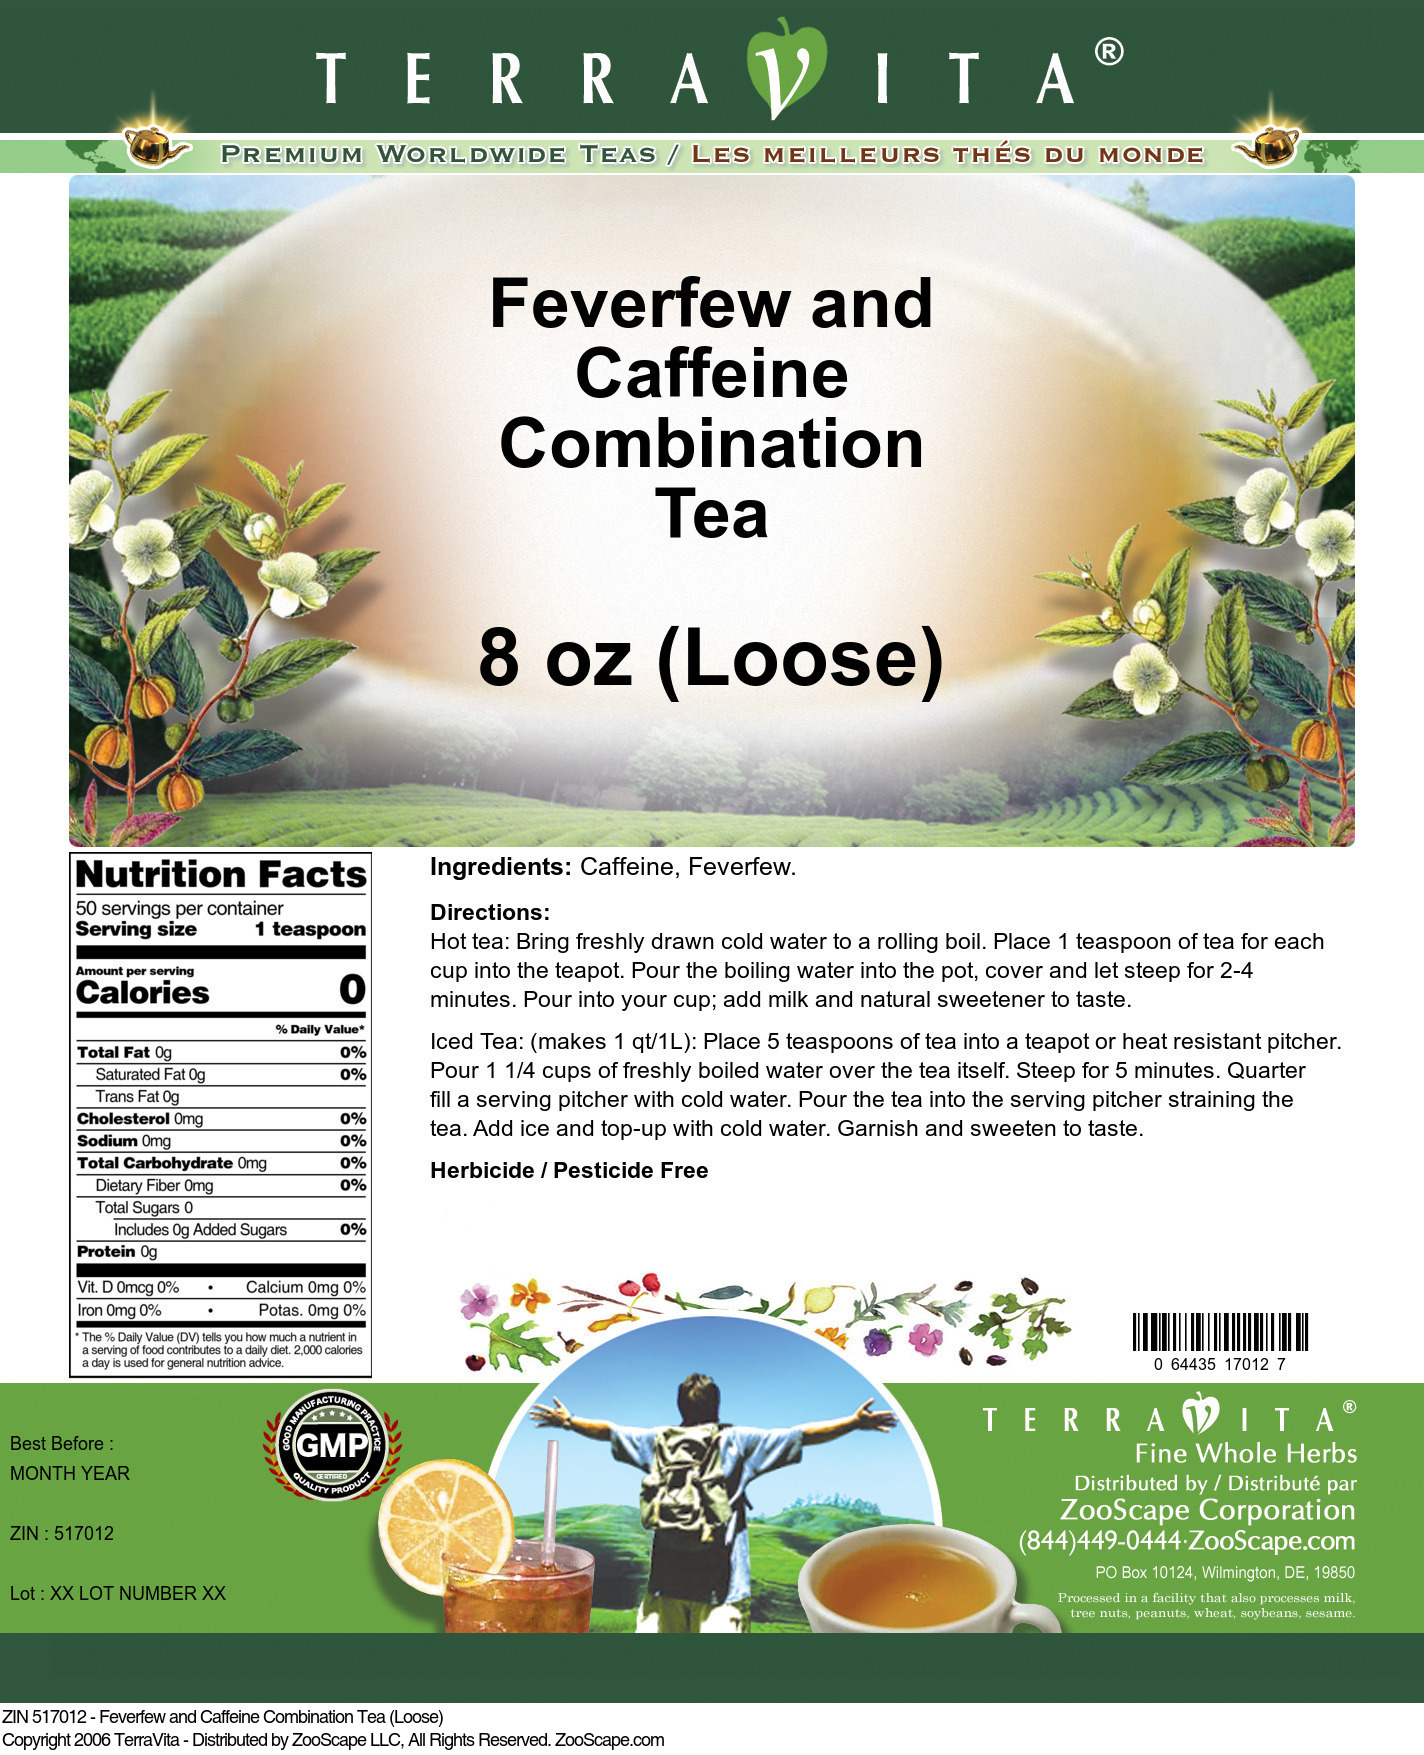 Feverfew and Caffeine Combination Tea (Loose) - Label